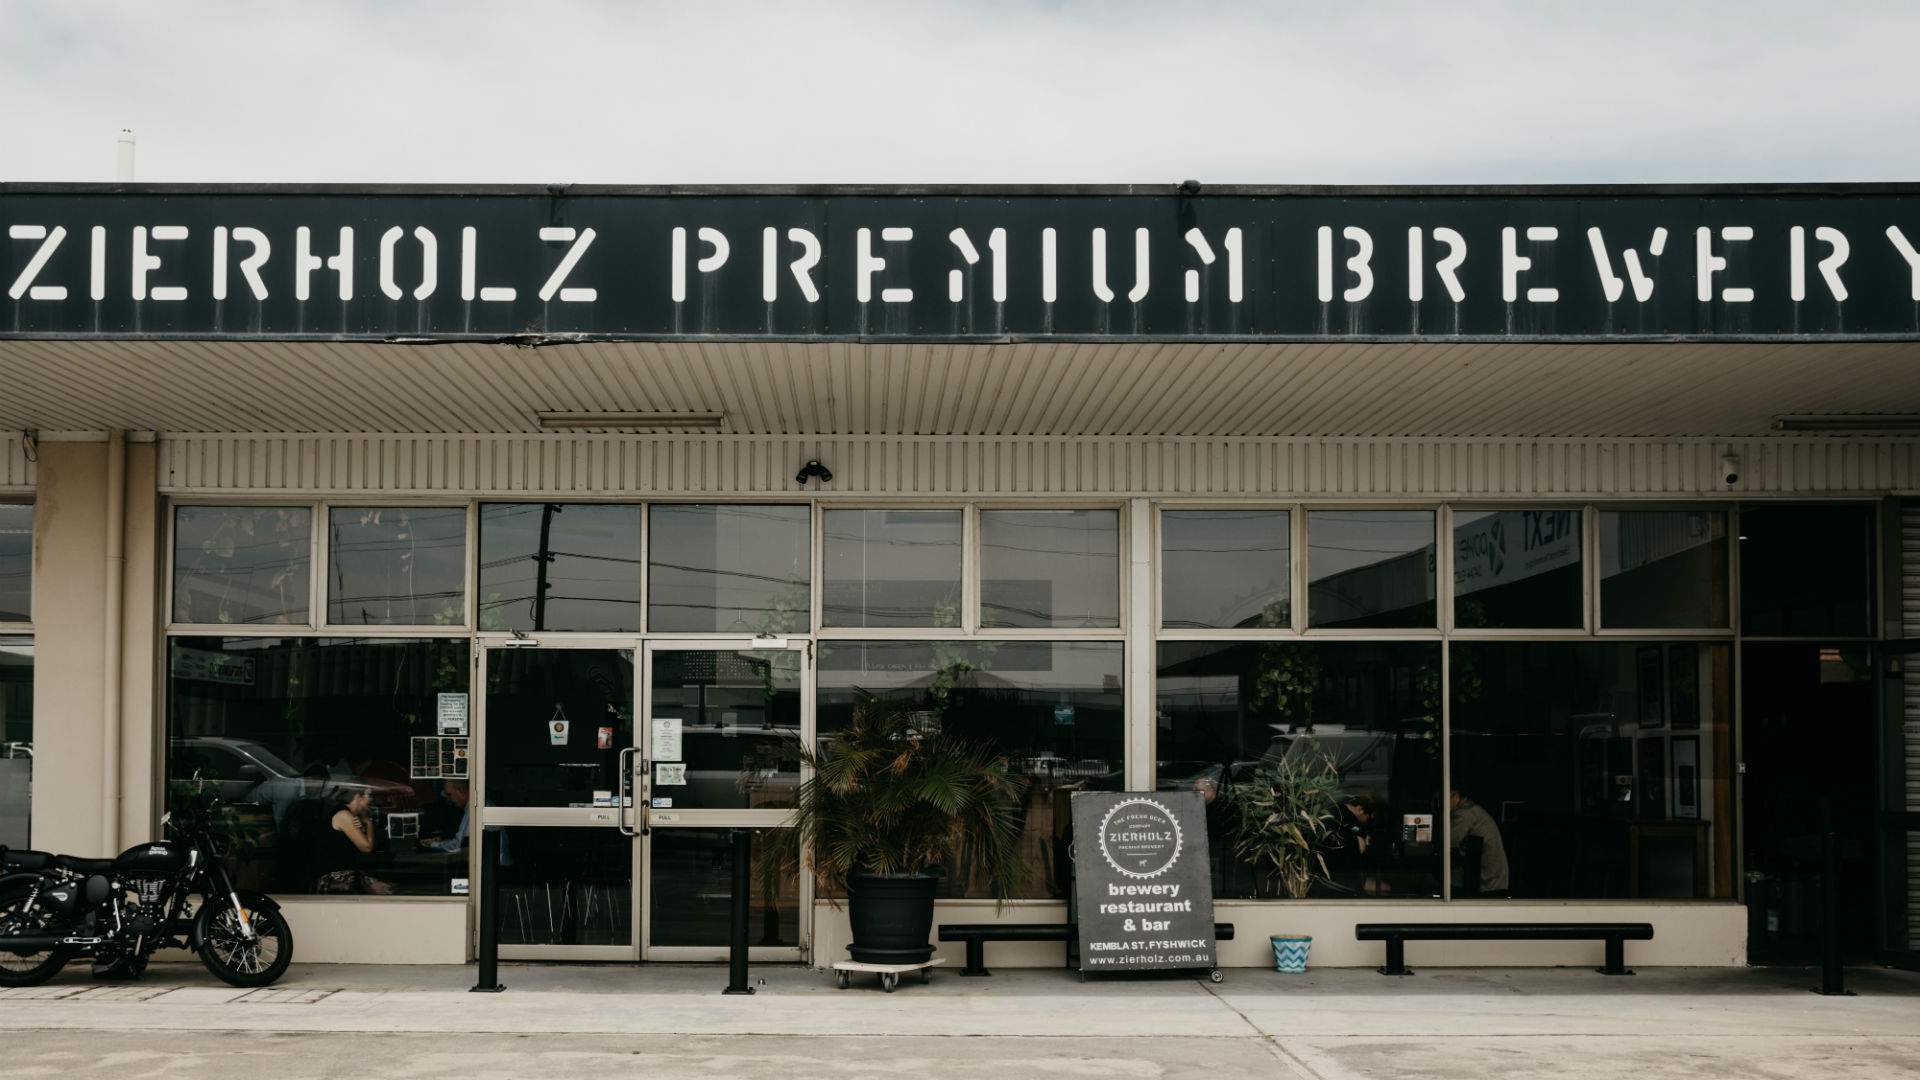 Zierholz Premium Brewery